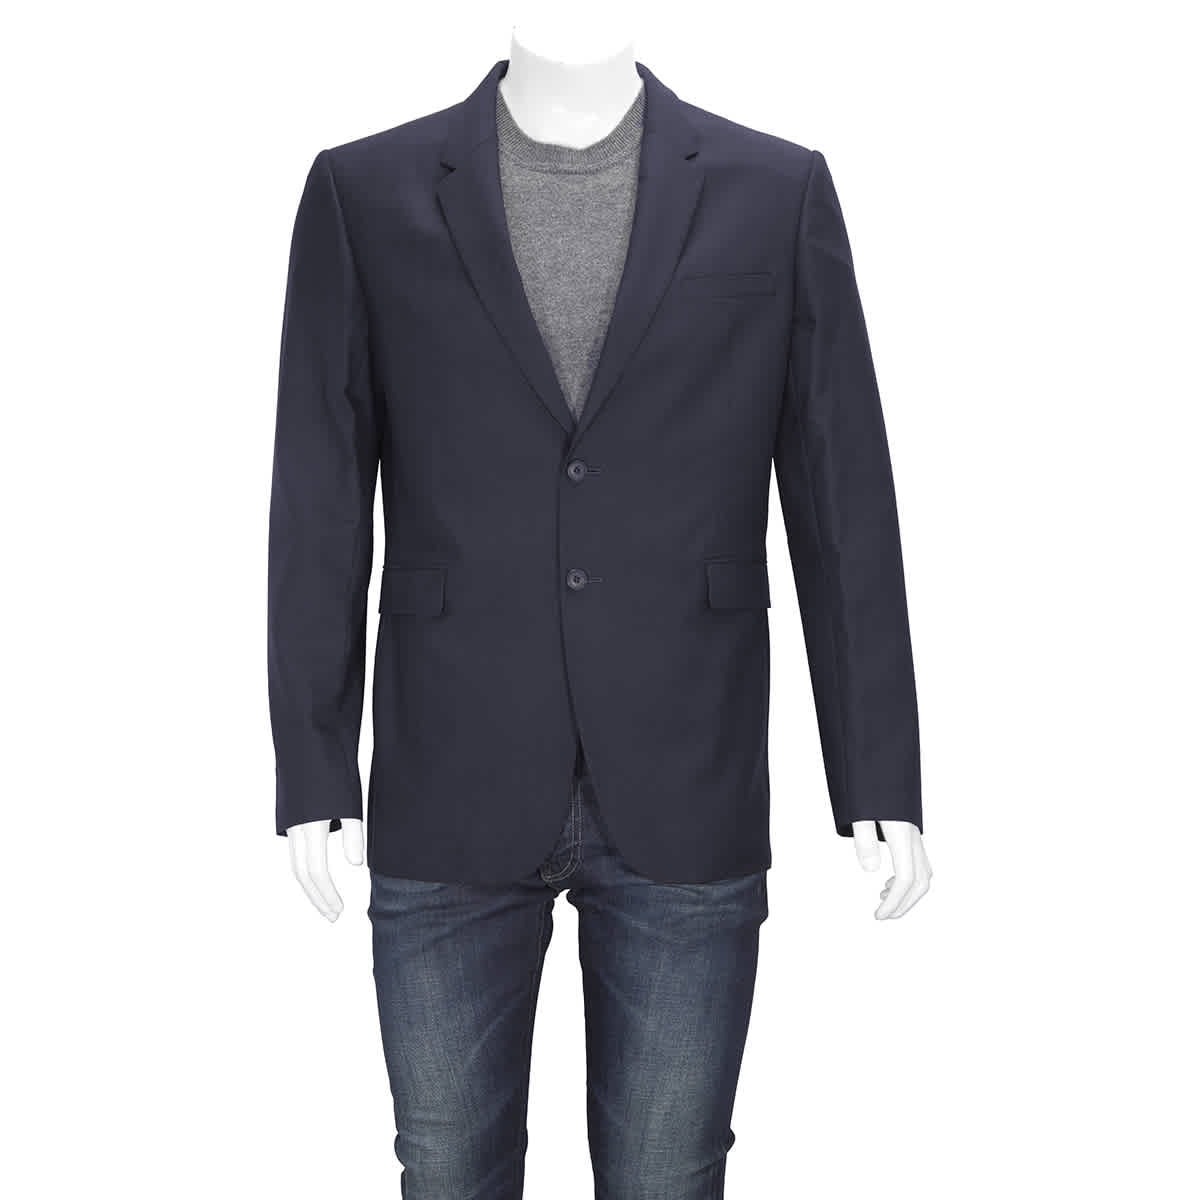 Burberry Men's Navy Millbank Abiyo Suit Jacket, Brand Size 54R (US Size 44)  